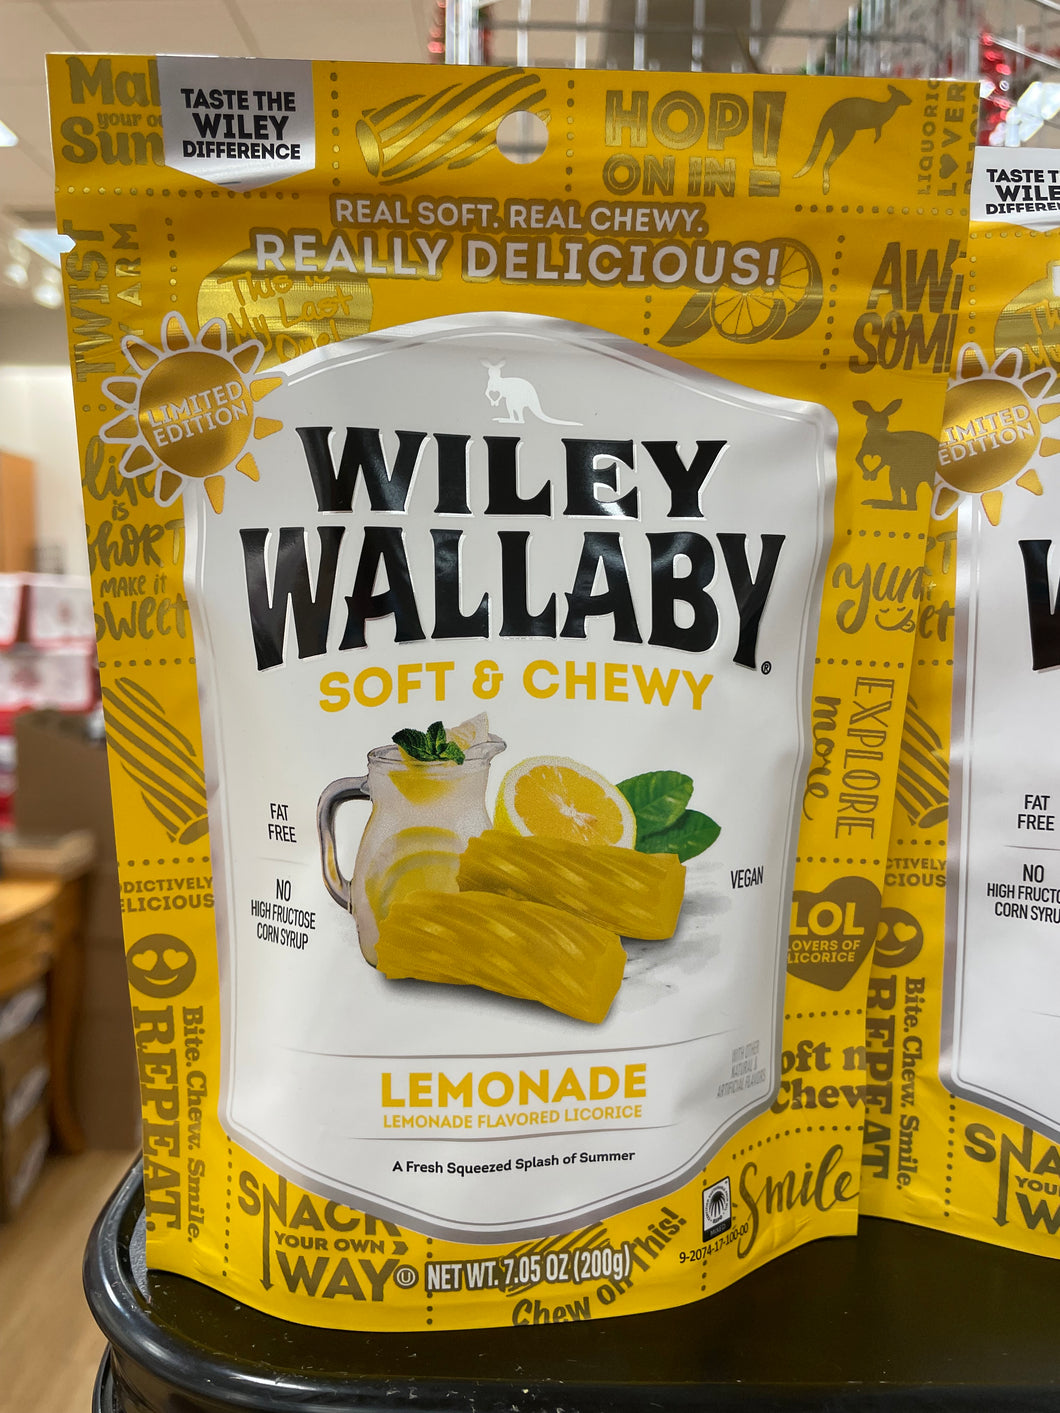 Wiley Wallaby Lemonade Licorice